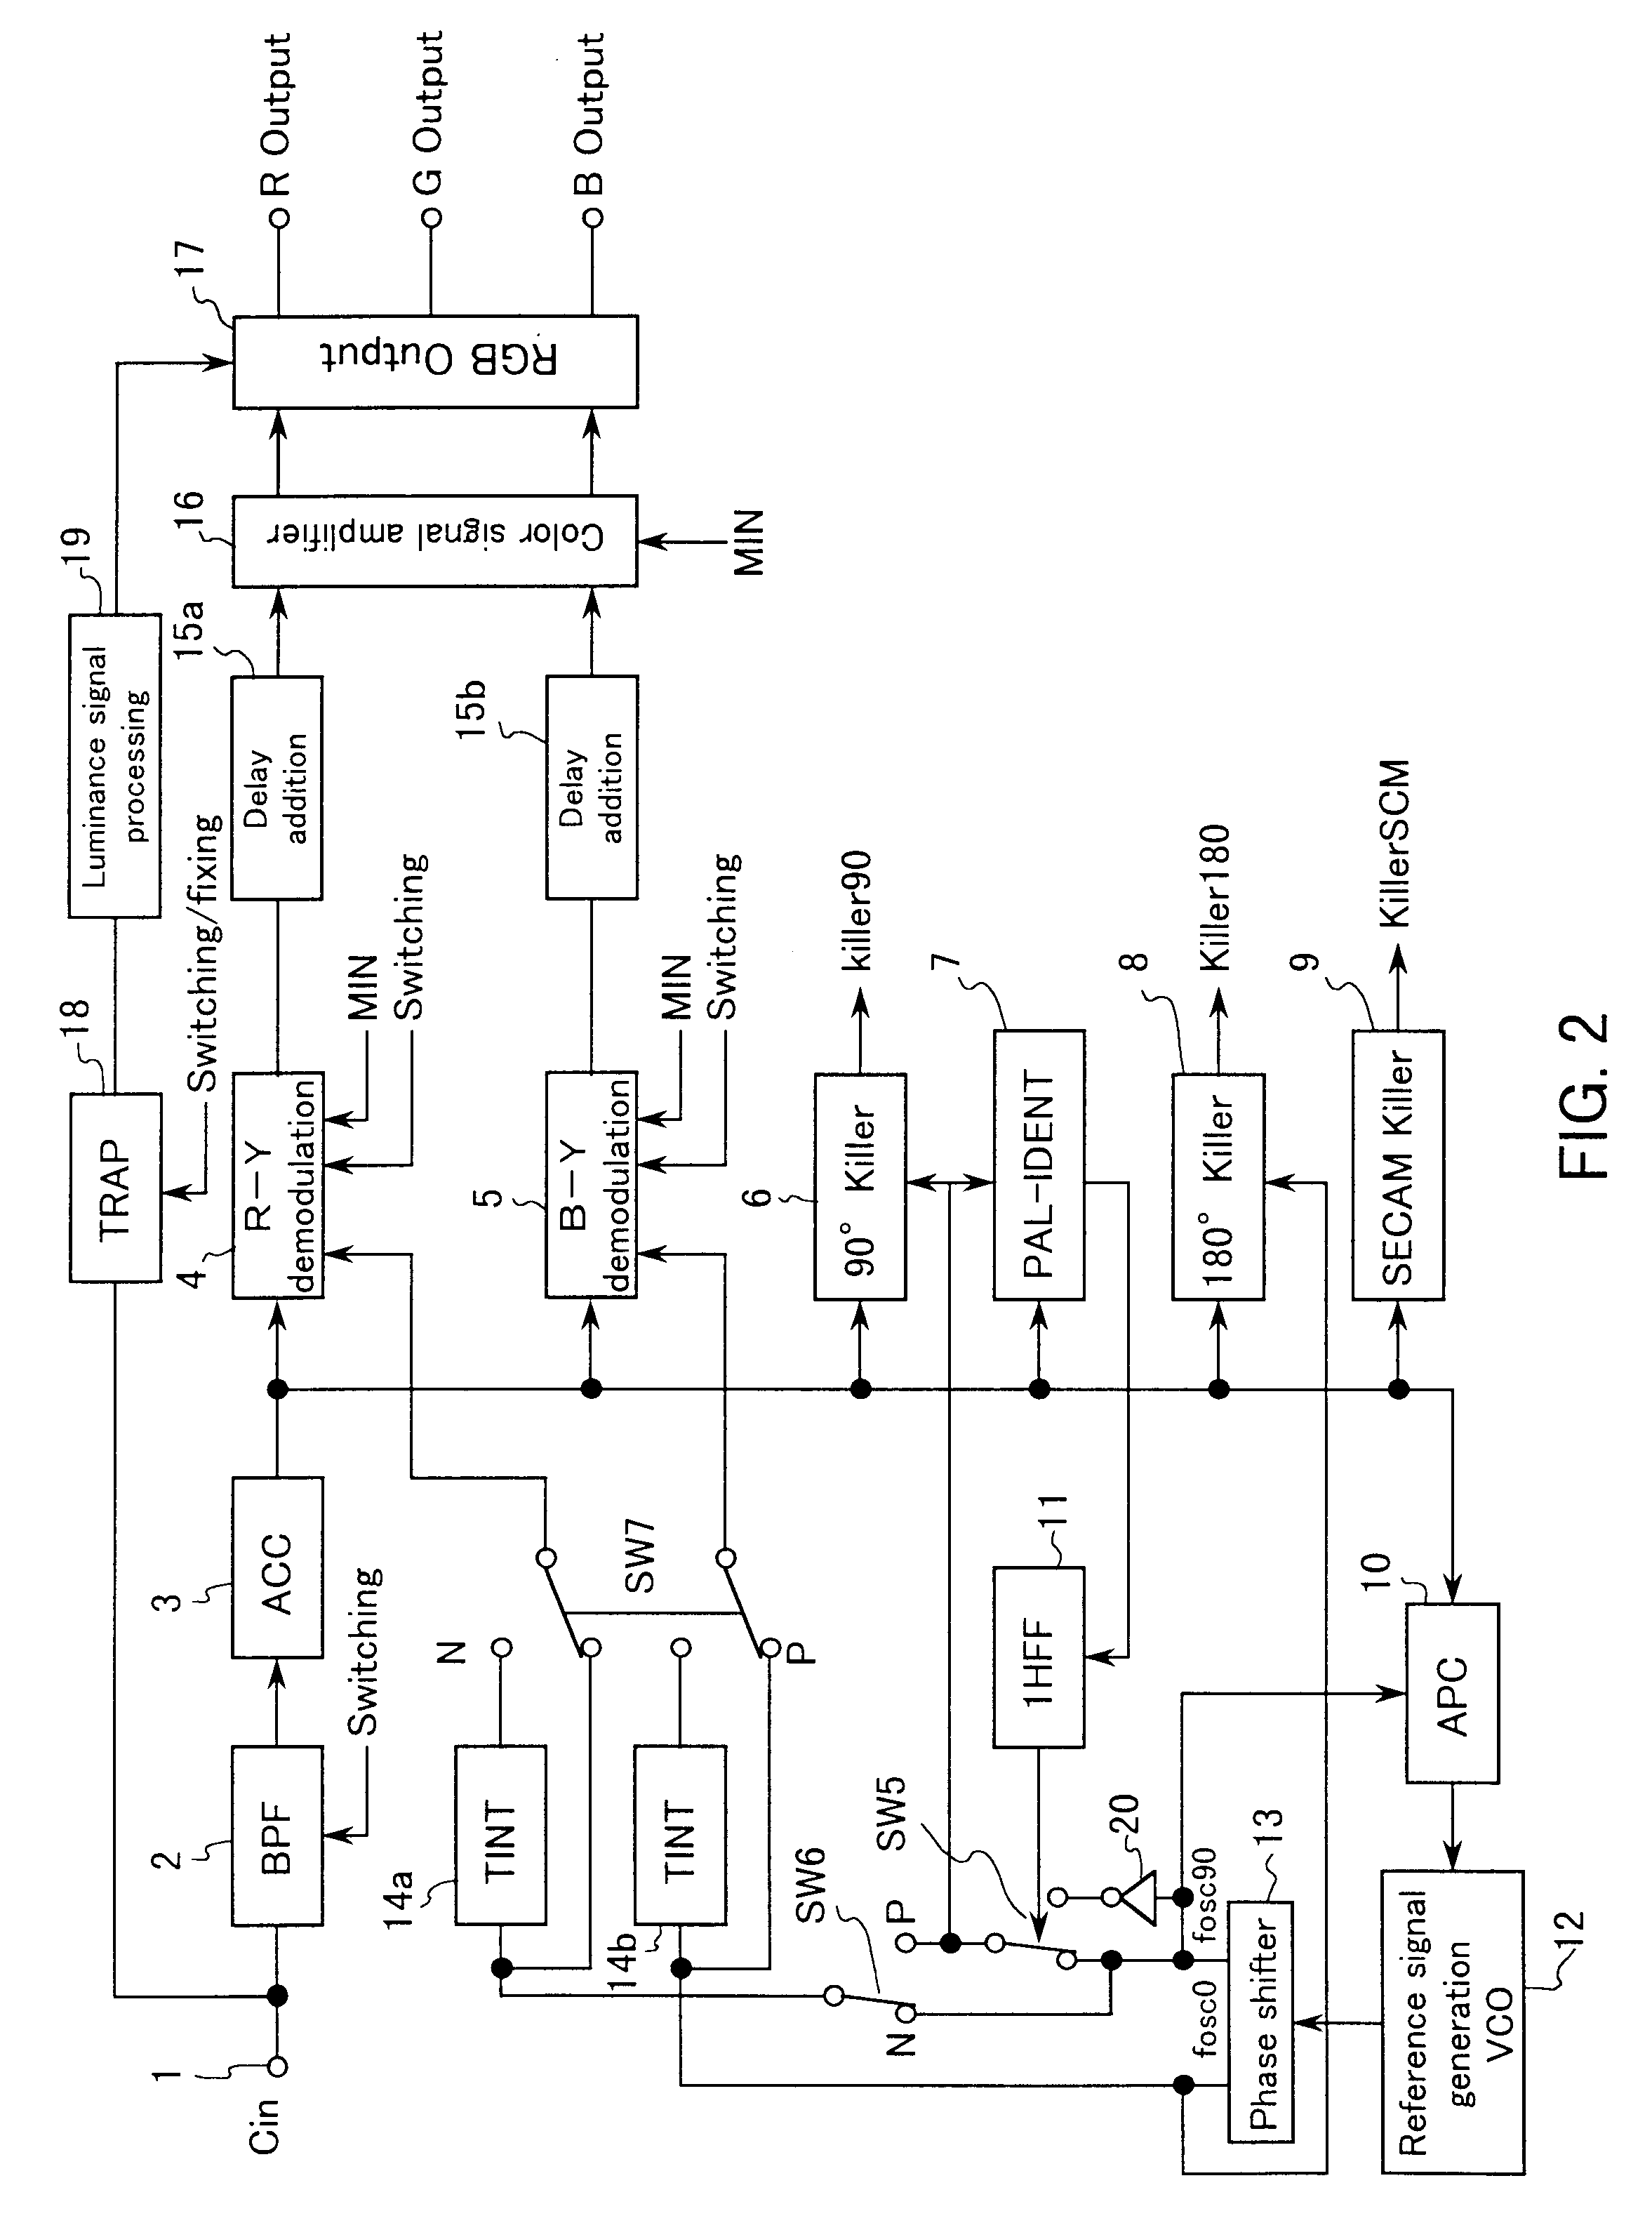 Color transmission system discrimination circuit in television set